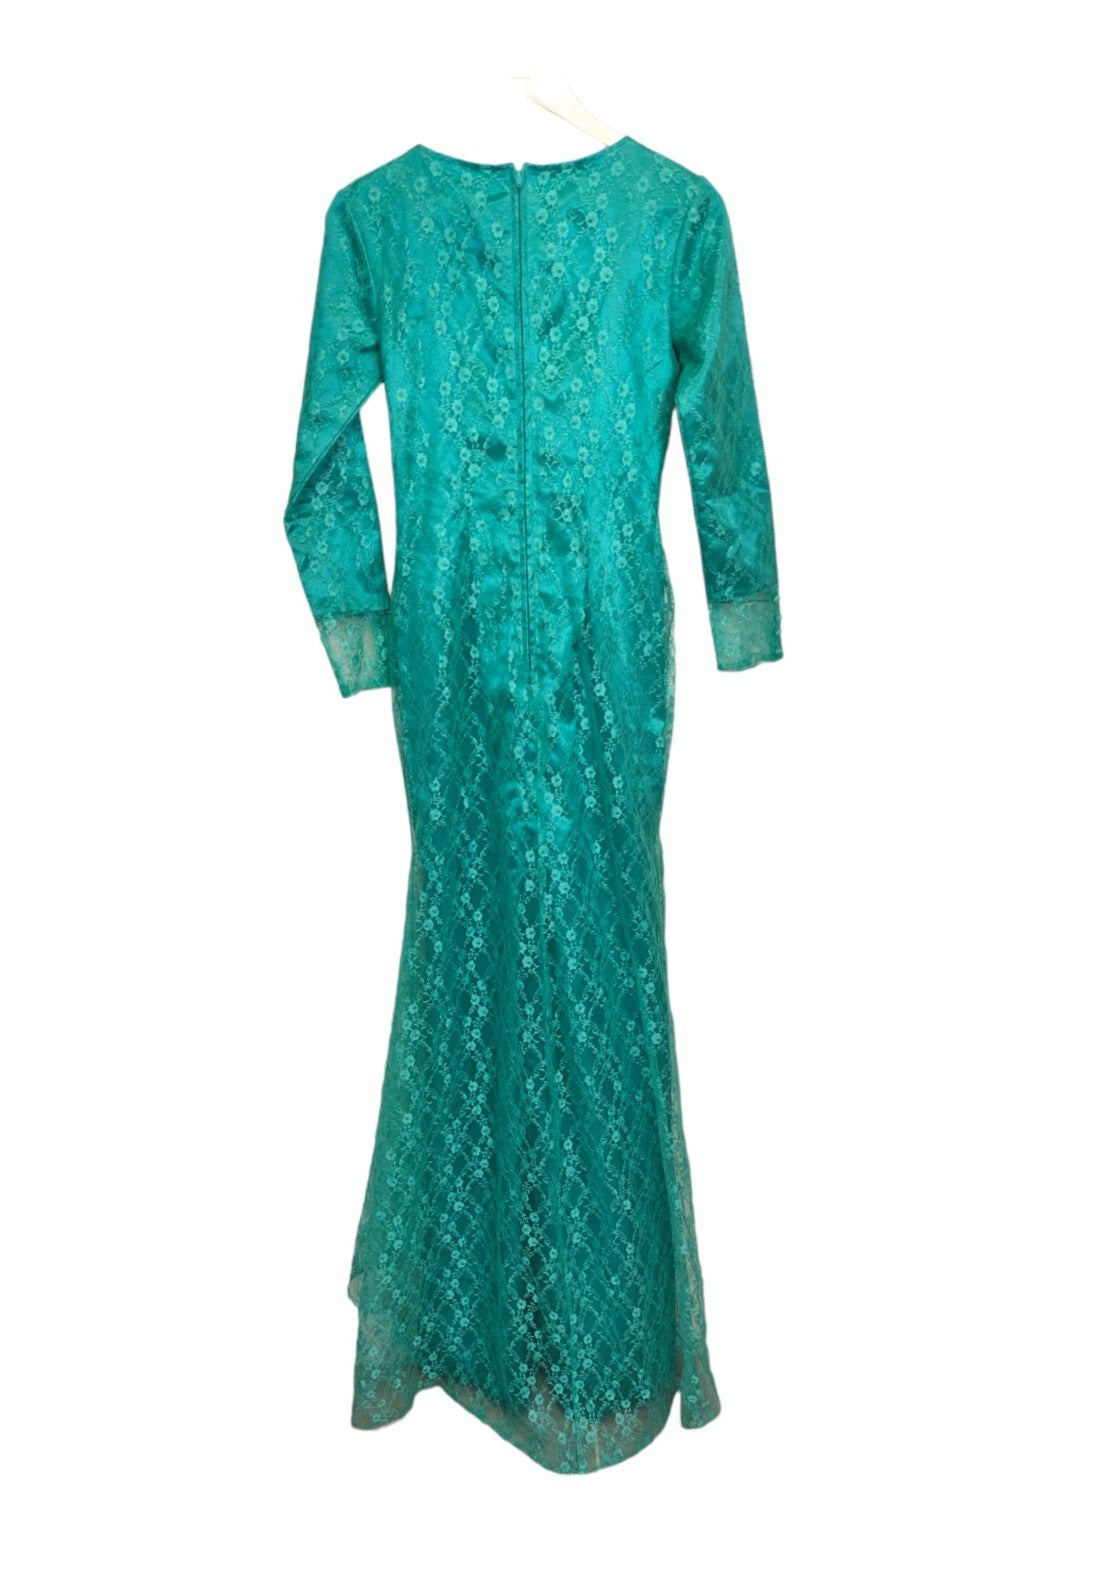 Vintage, Maxi, Σατέν, Βραδινό Φόρεμα με Δαντέλα σε Πράσινο Χρώμα (XS/S)